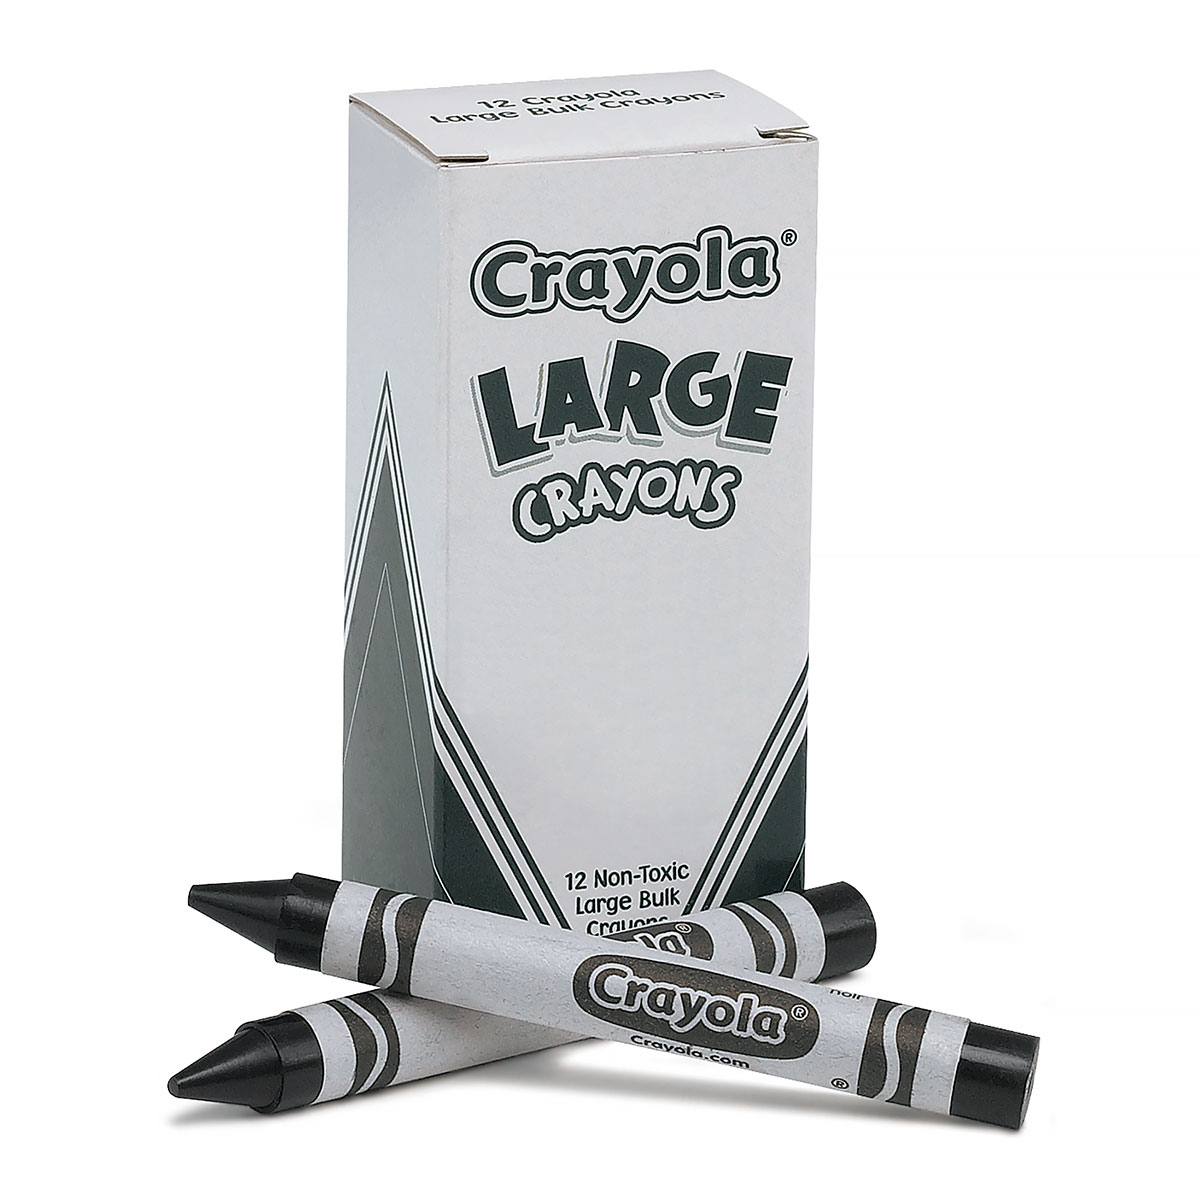 Crayola Large Crayons - Box of 12, Black